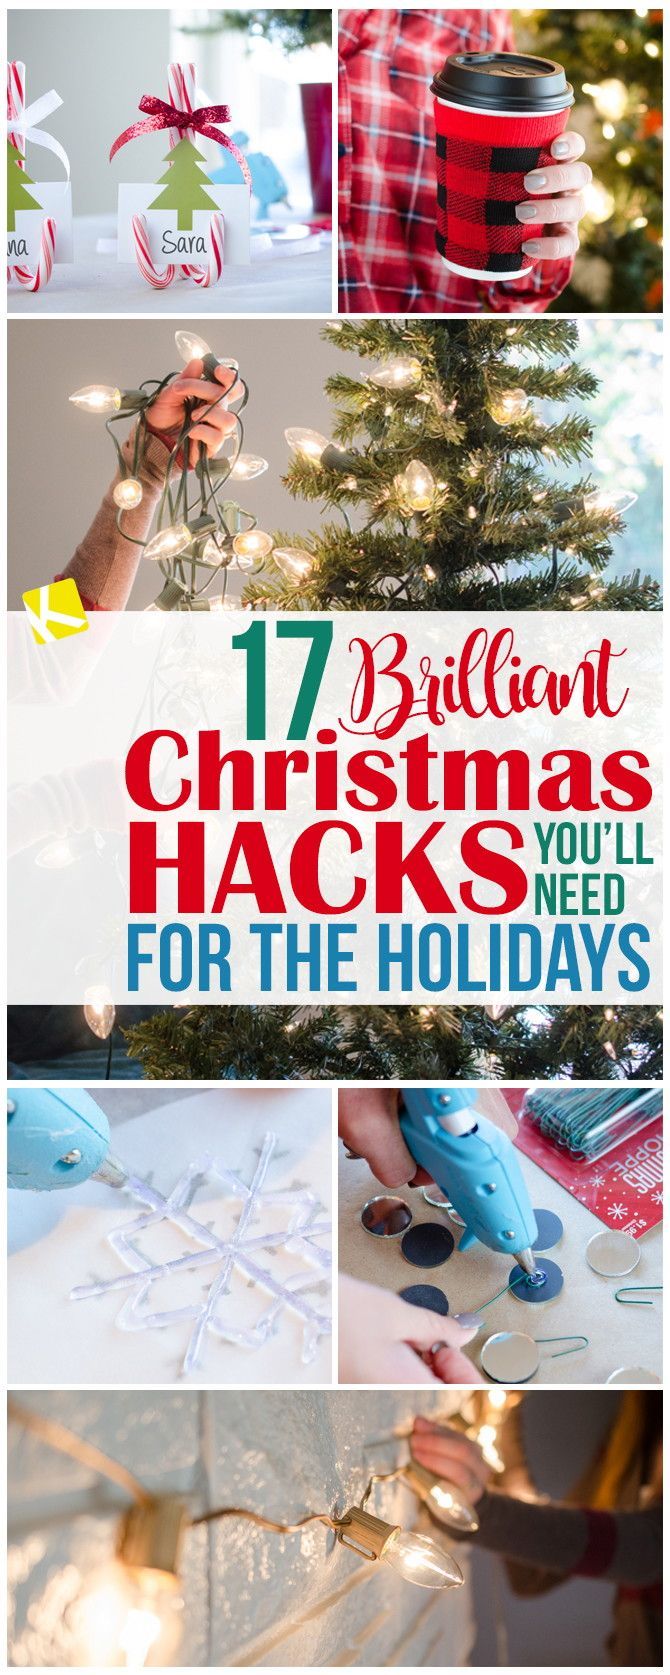 15 holiday Hacks good ideas